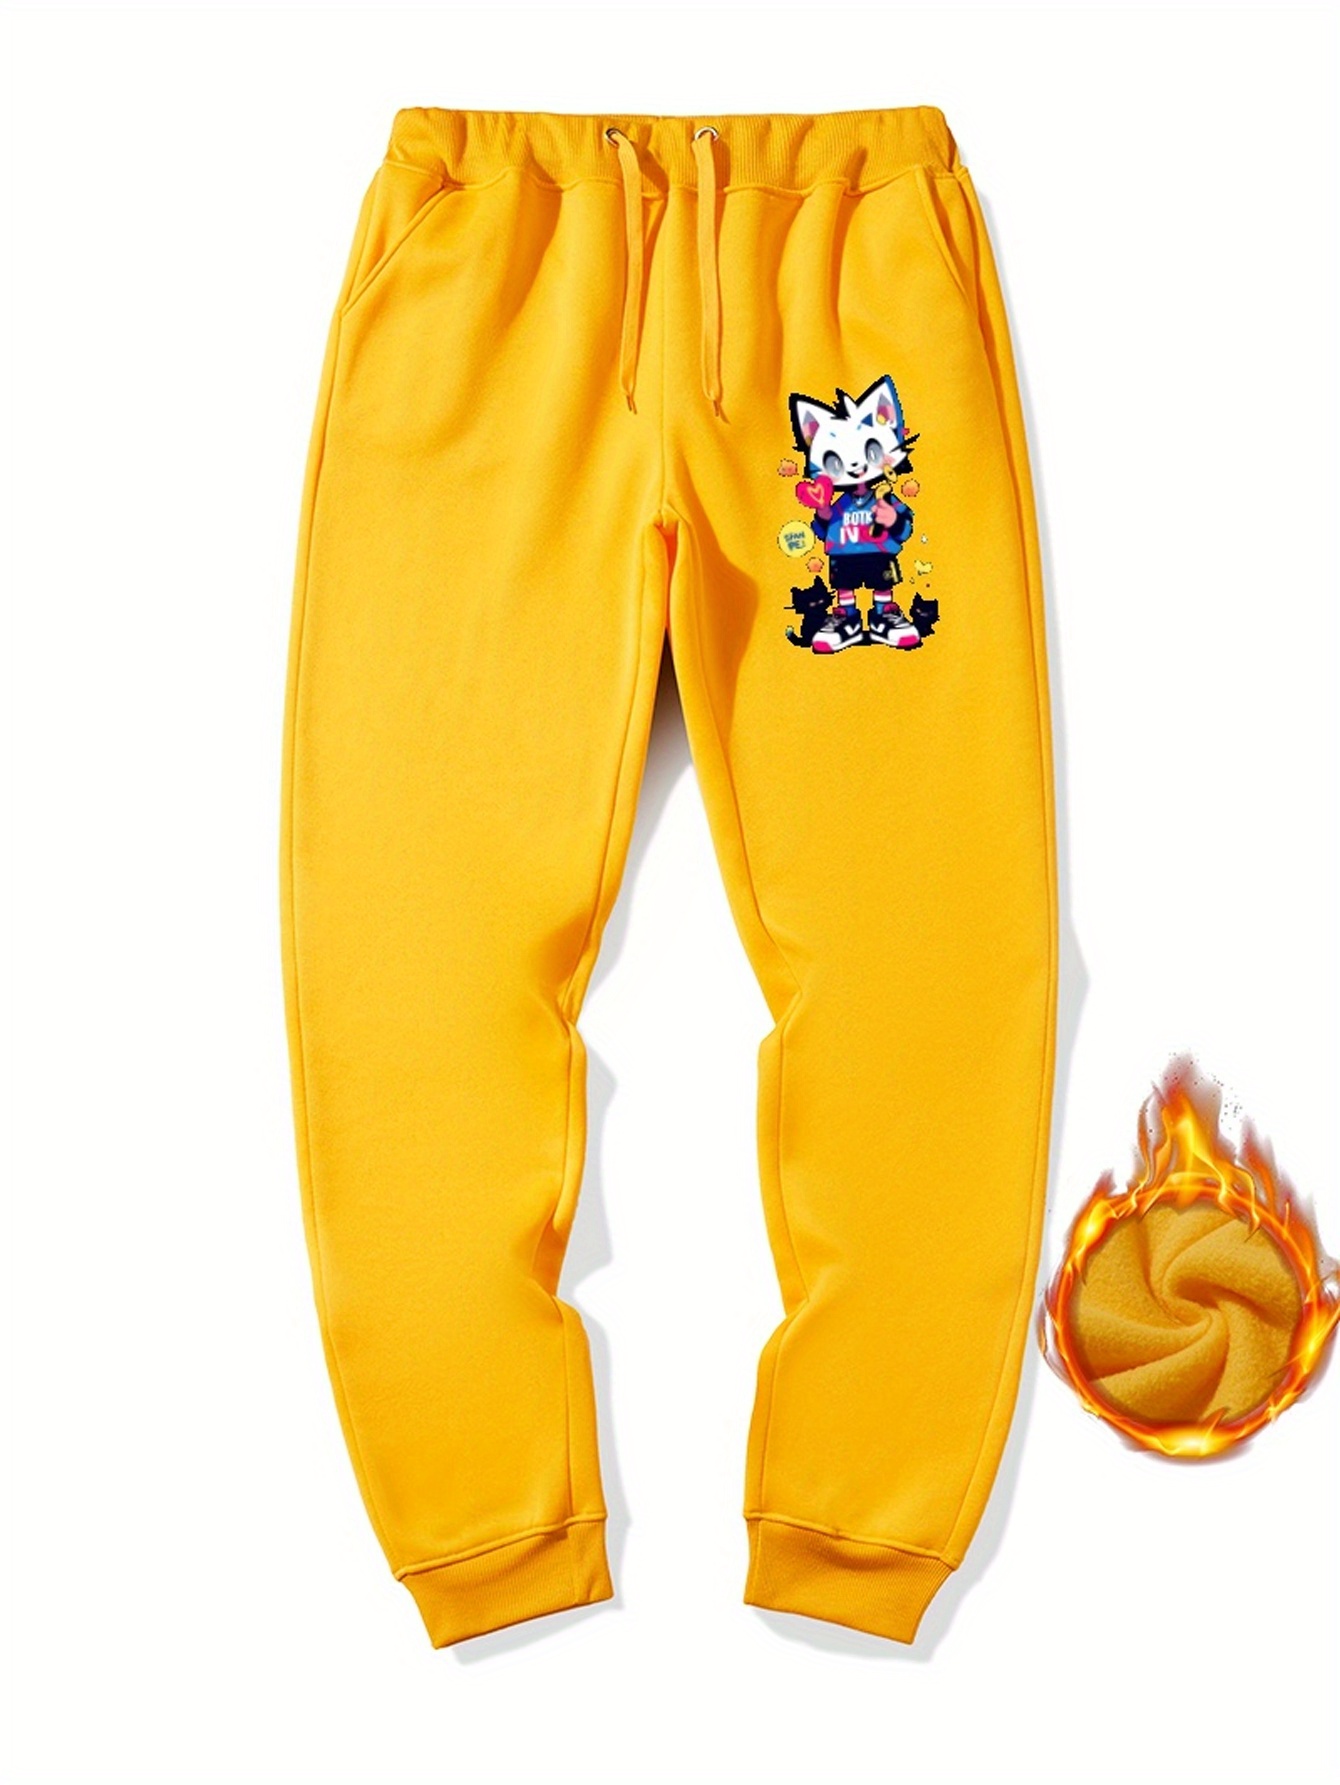 Garfield Men's Graphic Print Sleep Pants, Sizes S-2XL 